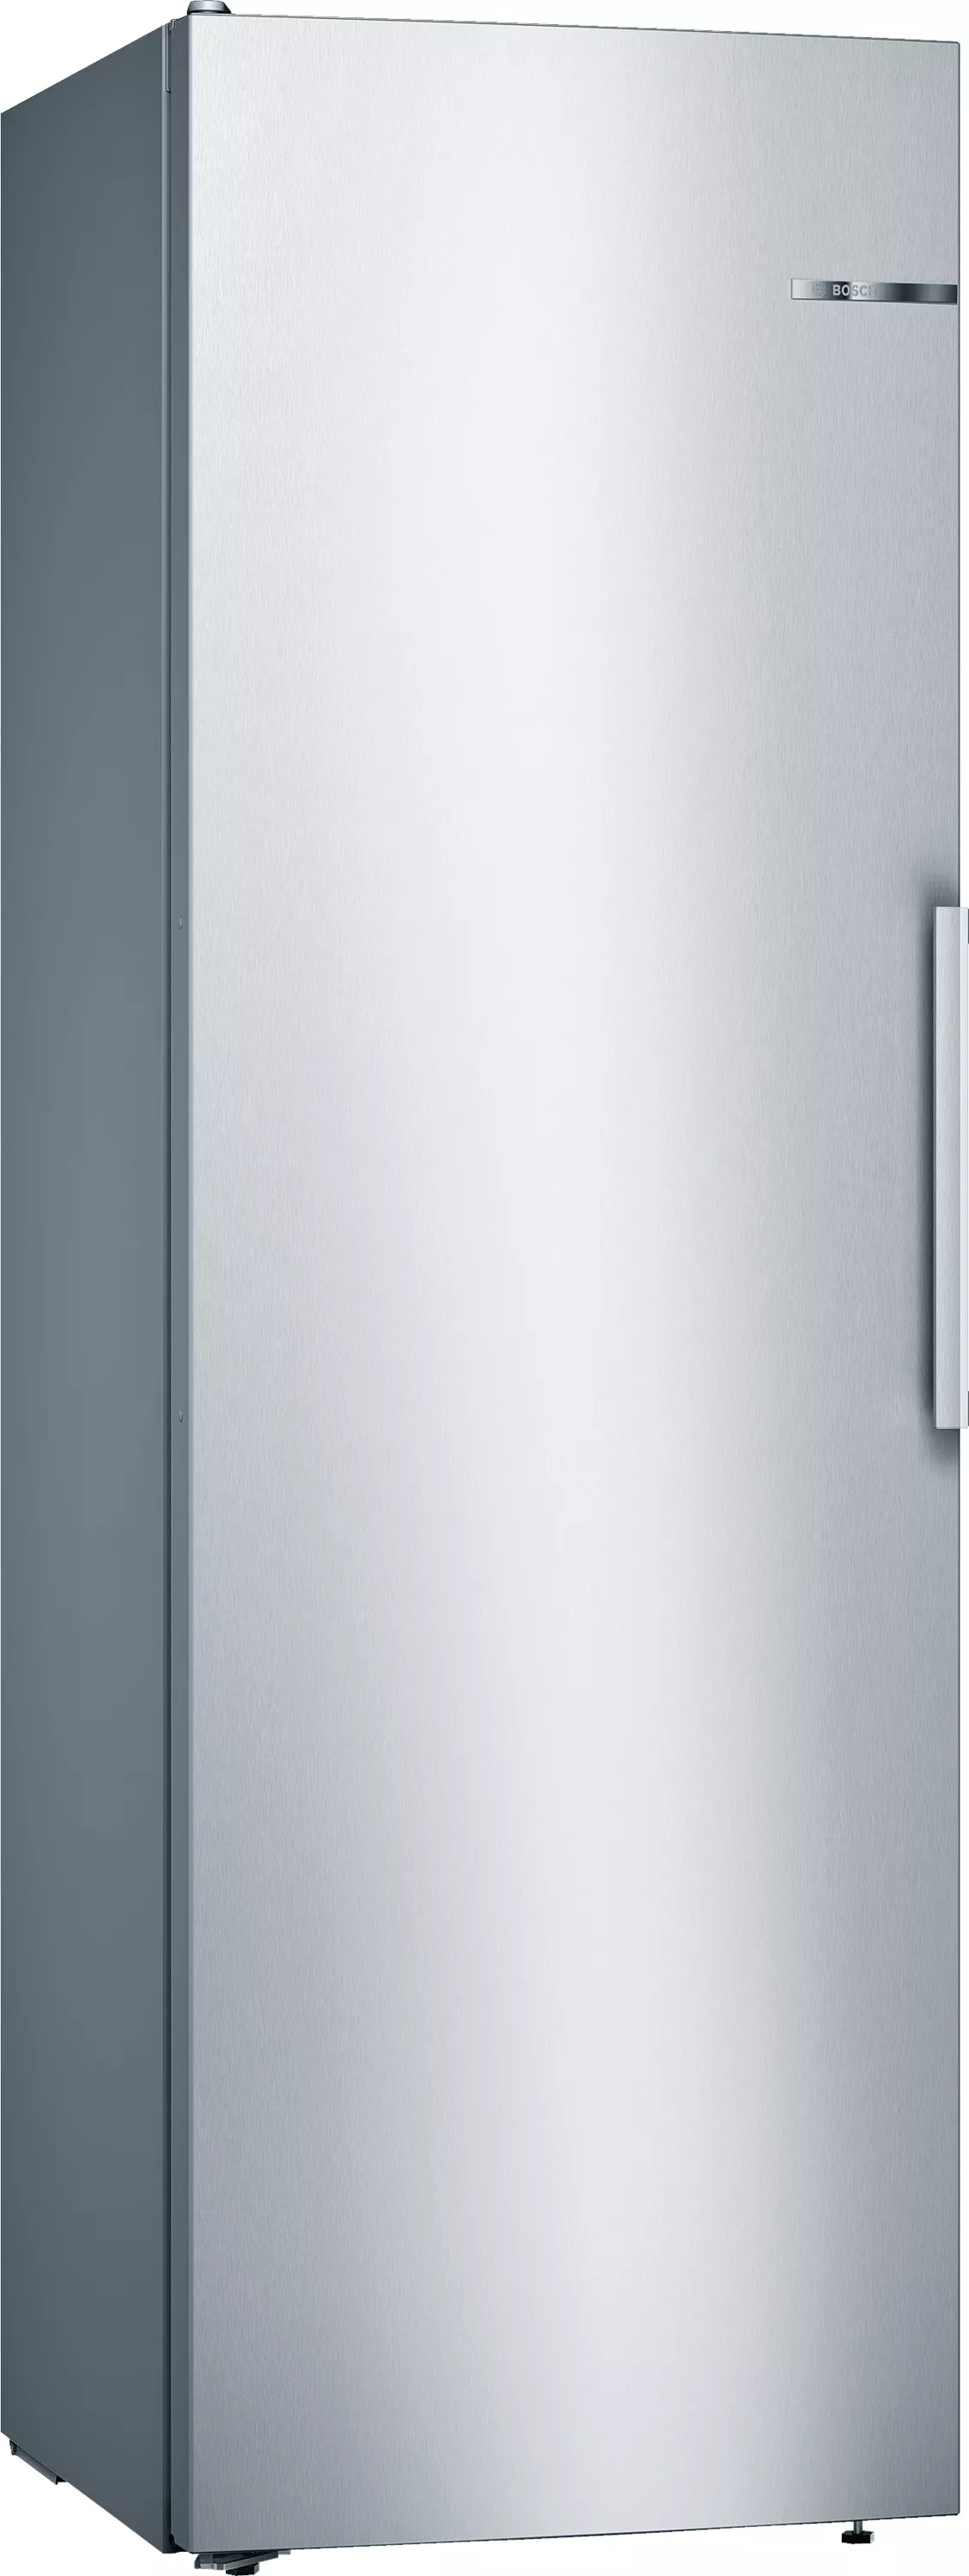 Bosch Serie 4, Freistehender Kühlschrank, 186 x 60 cm, Edelstahl-Optik, KSV36VLDP